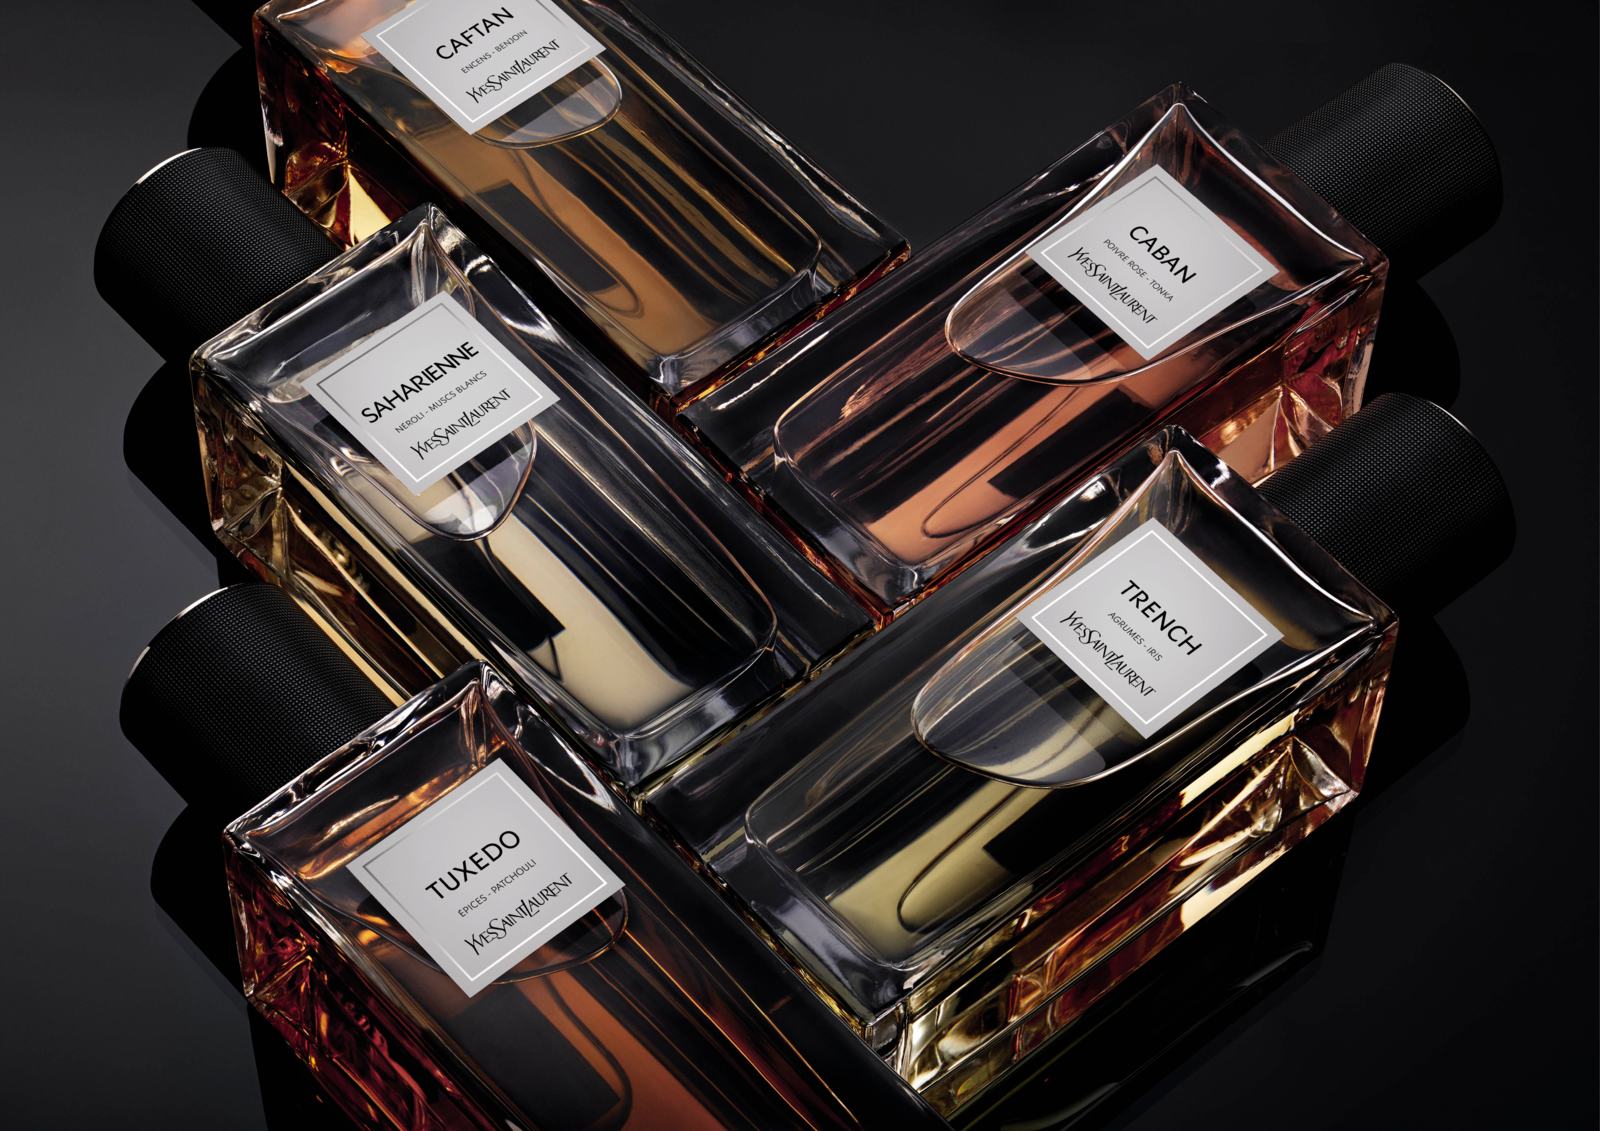 Caftan Yves Saint Laurent perfume - a new fragrance for women and men 2015